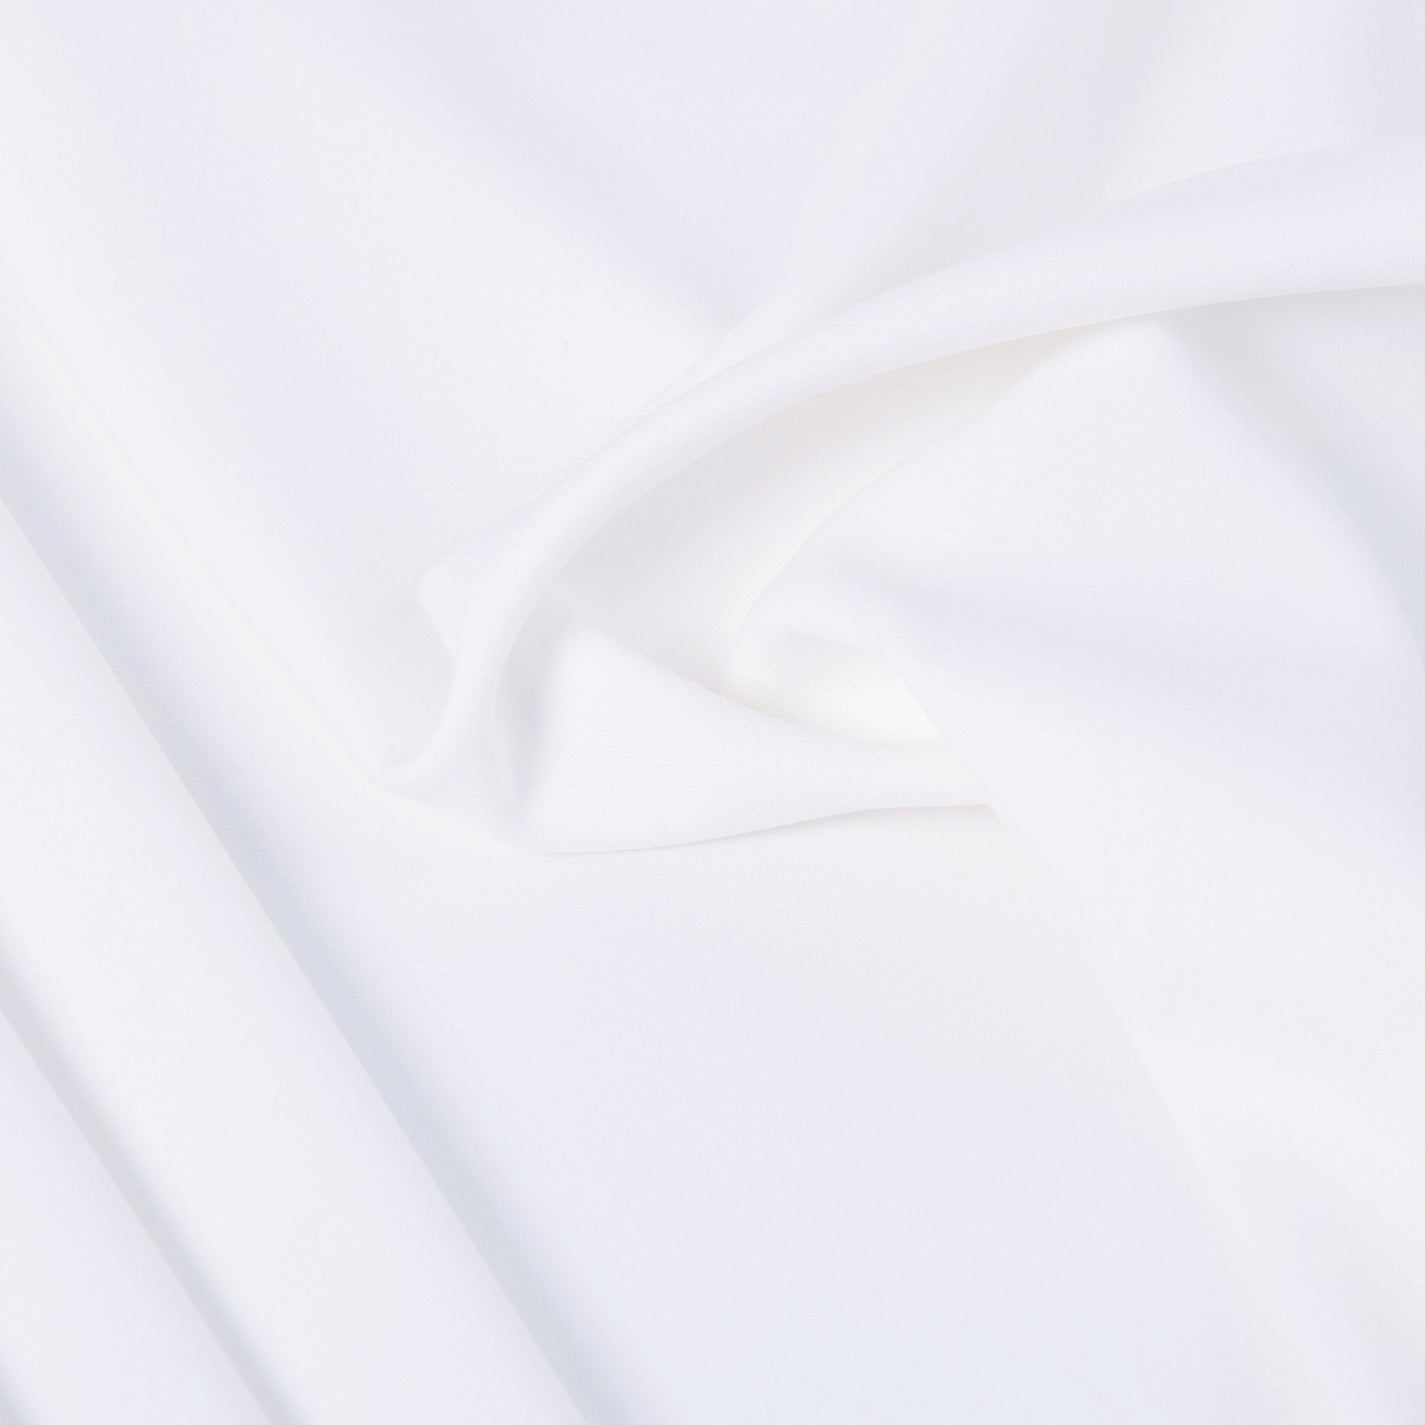 Stretch White Crepe Fabric 2849 - Fabrics4Fashion